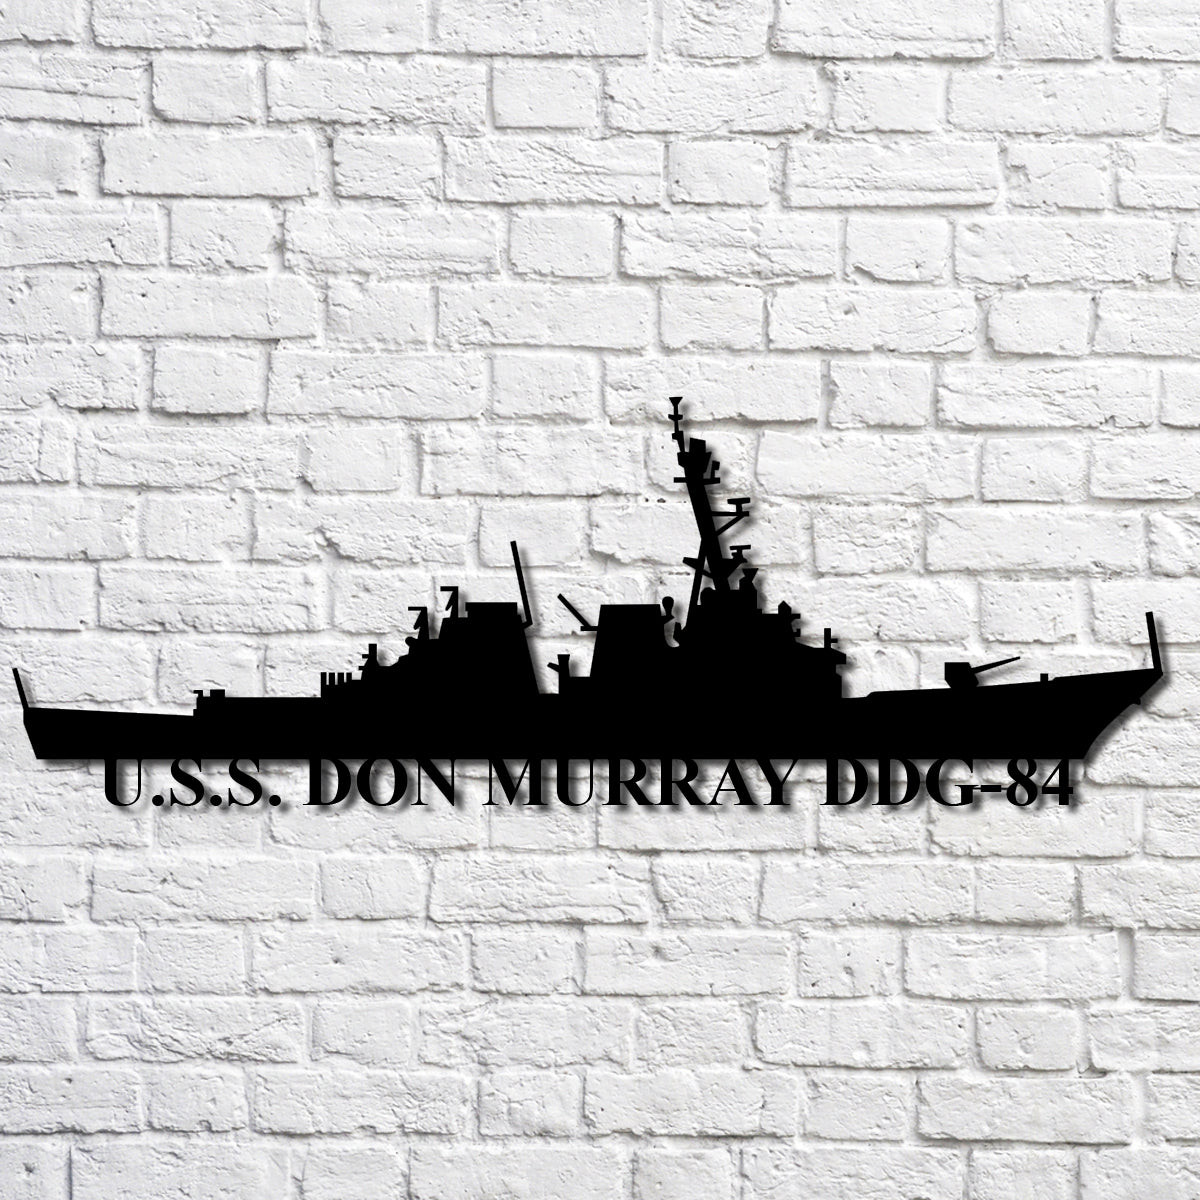 U.s.s. Don Murray Ddg84 Navy Ship Metal Art, Custom Us Navy Ship Cut Metal Sign, Gift For Navy Veteran, Navy Ships Silhouette Metal Art, Navy Home Decor Laser Cut Metal Signs Custom Gift Ideas 12x12IN